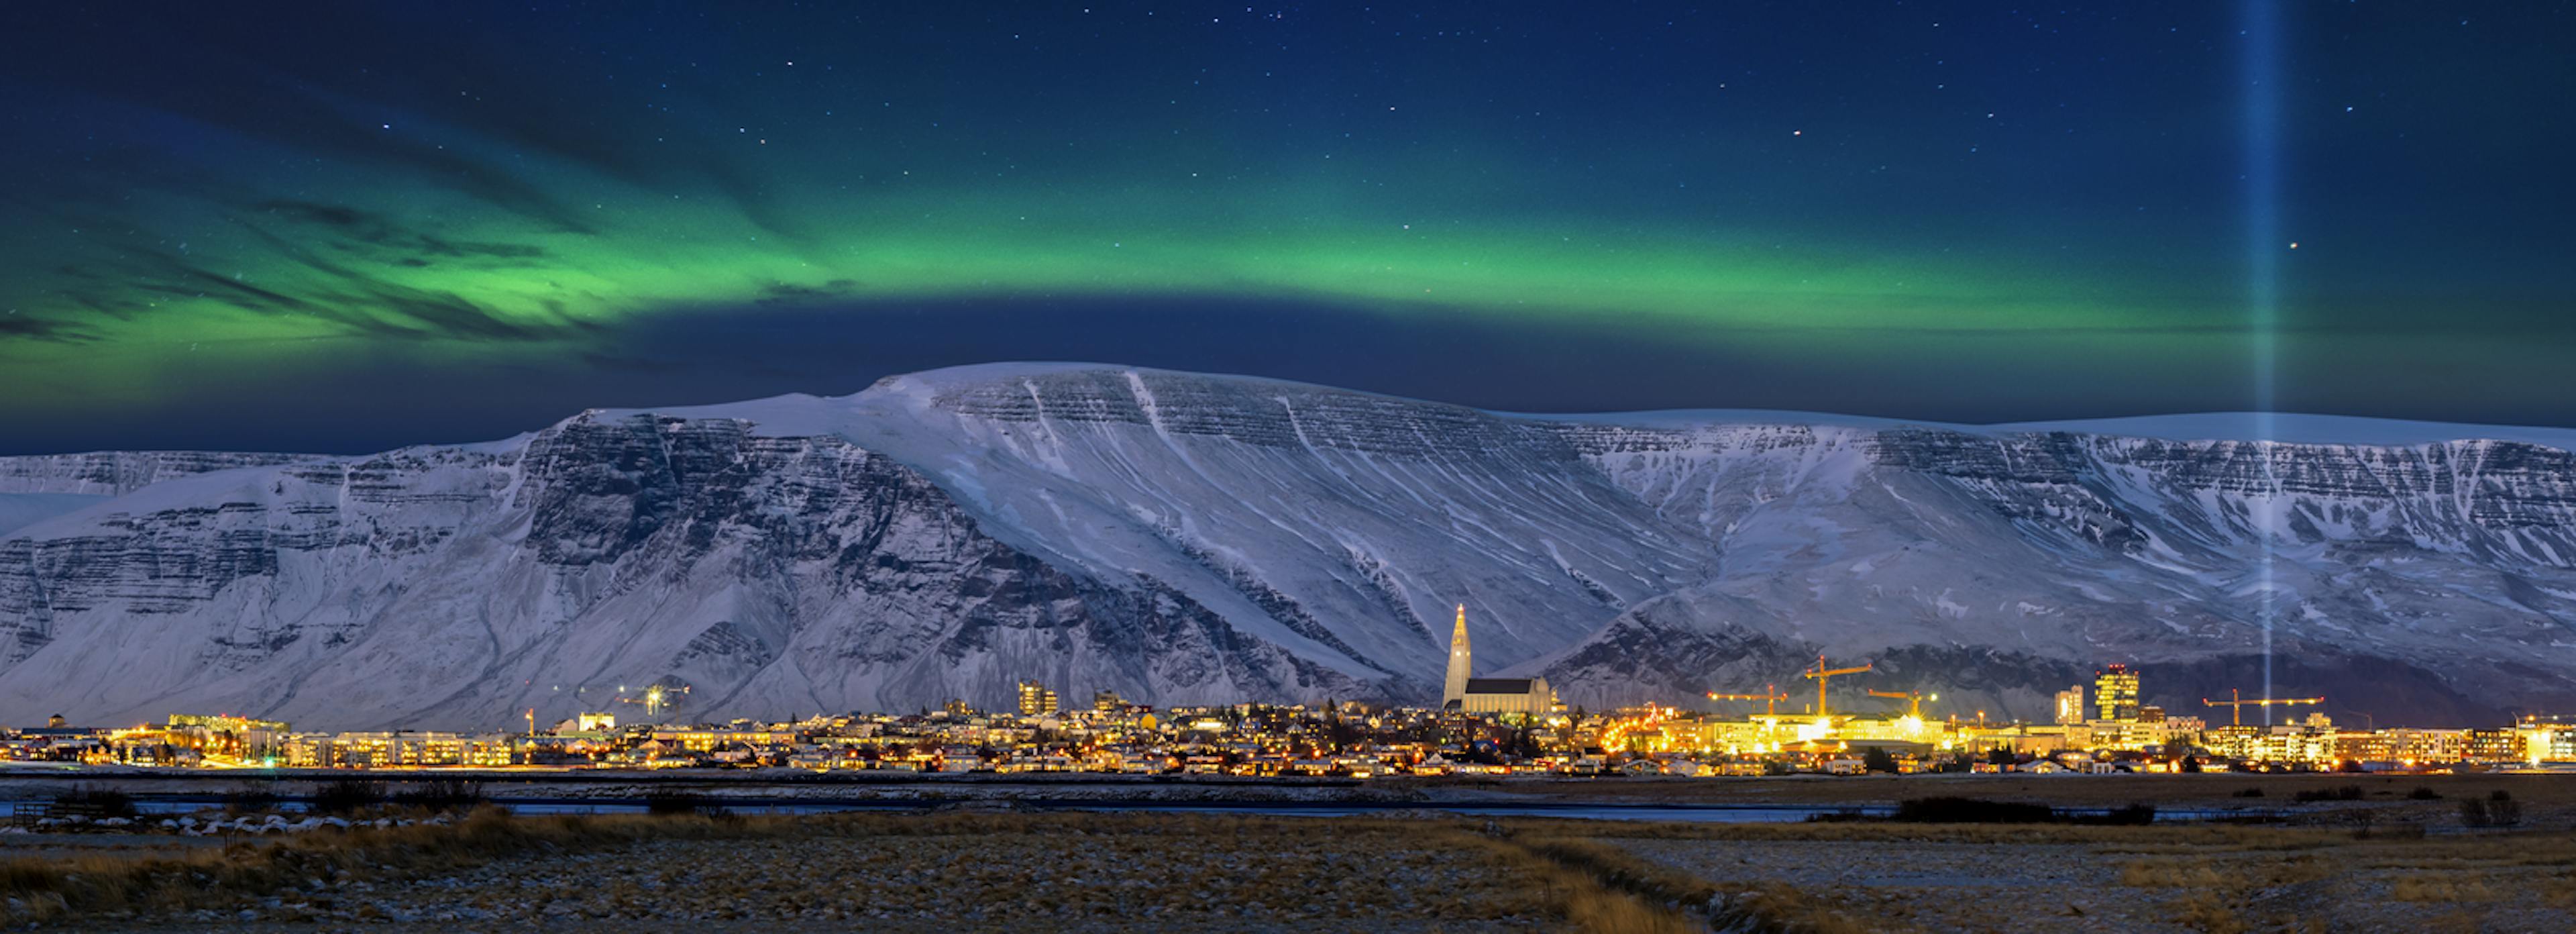 Northern lights in Reykjavik in January